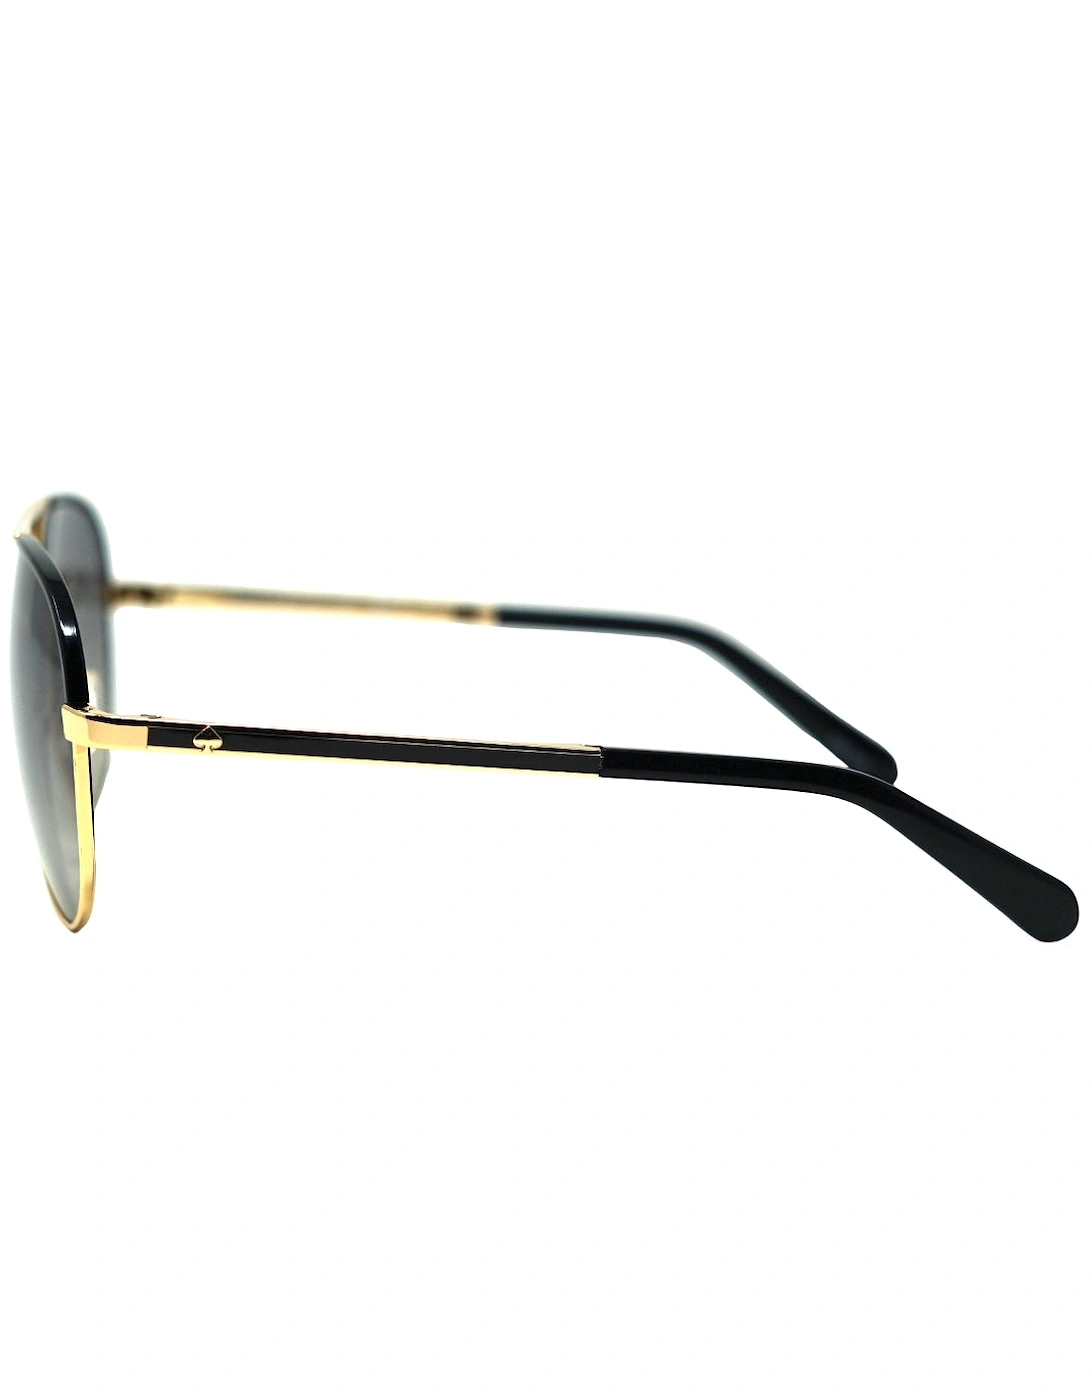 Amarissa 0W15 Gold Sunglasses